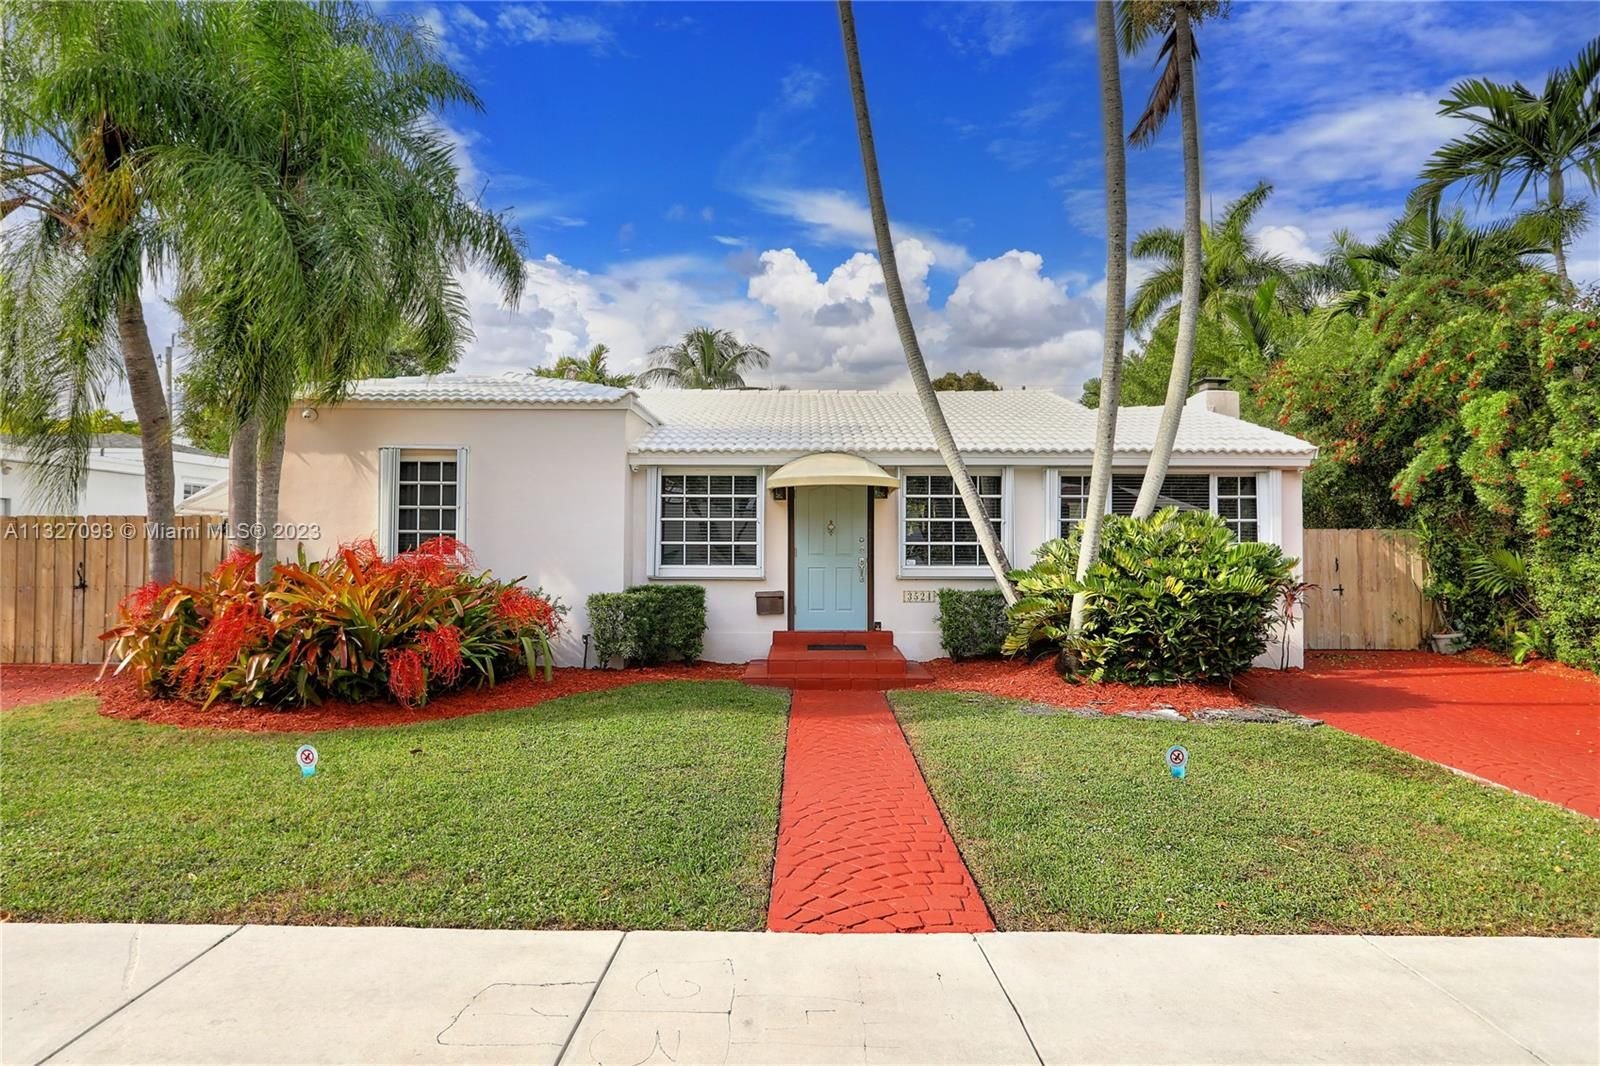 Real estate property located at 3524 60th Ave, Miami-Dade County, Miami, FL